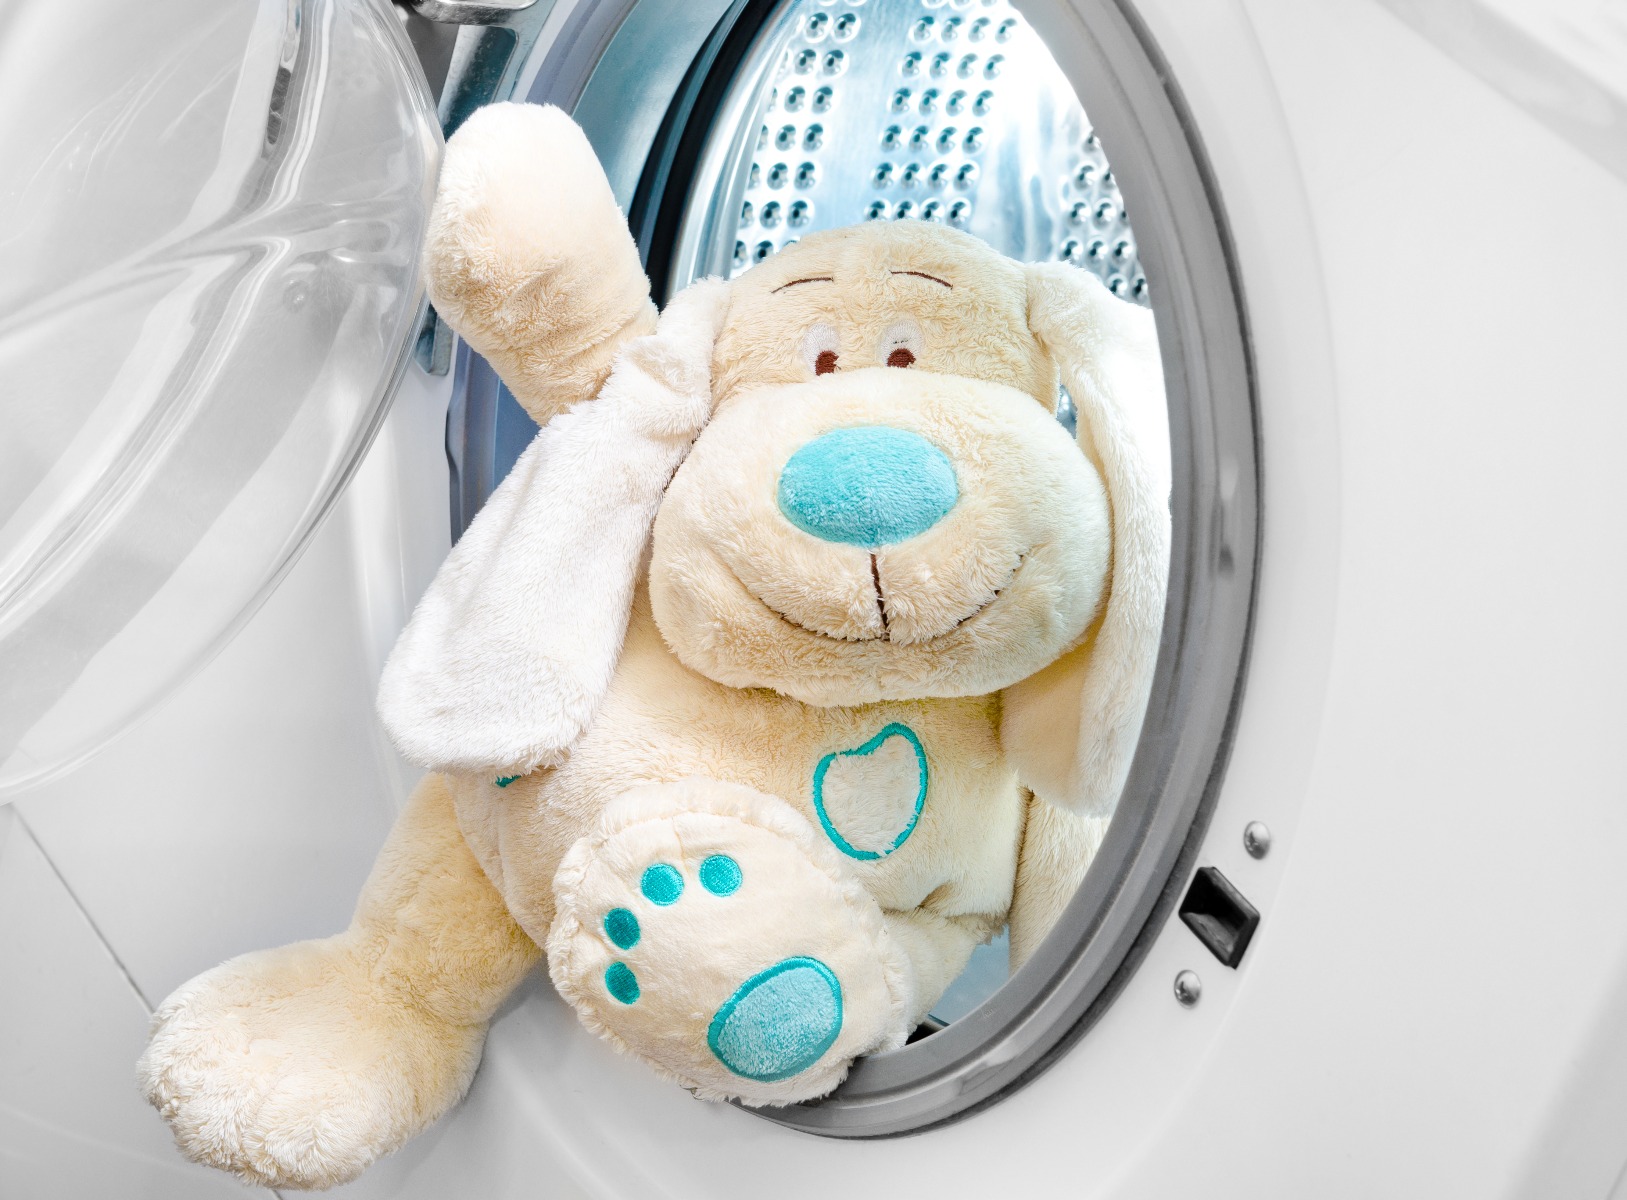 stuffed animal in washing machine